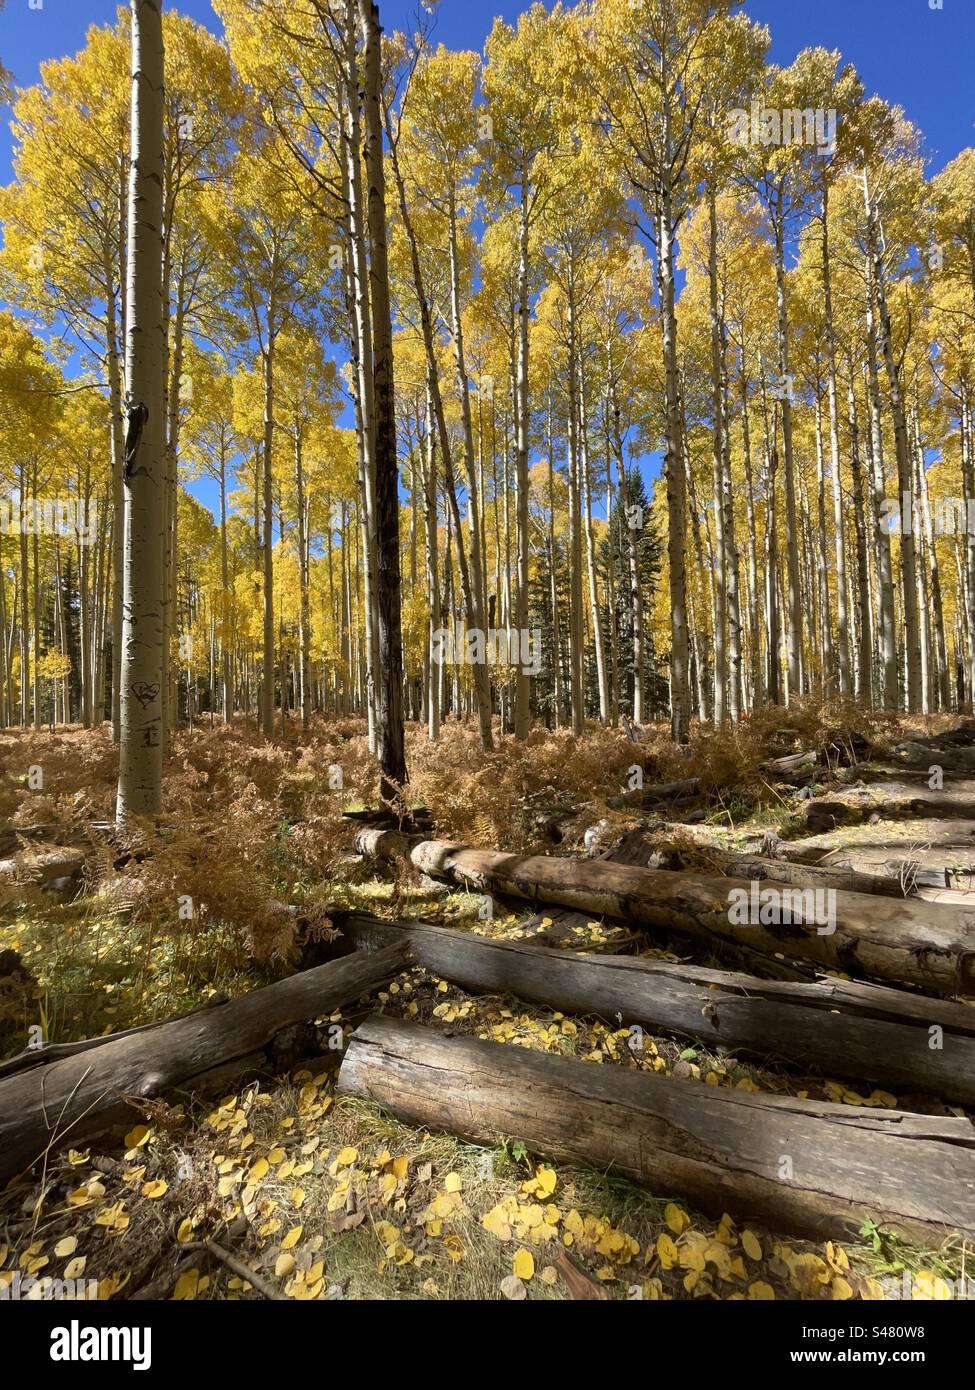 Forest Management, interwoven felled logs, Towering brilliant yellow Aspens, verdant green pines, golden fern undergrowth, bright blue sky, Flagstaff, Arizona Stock Photo